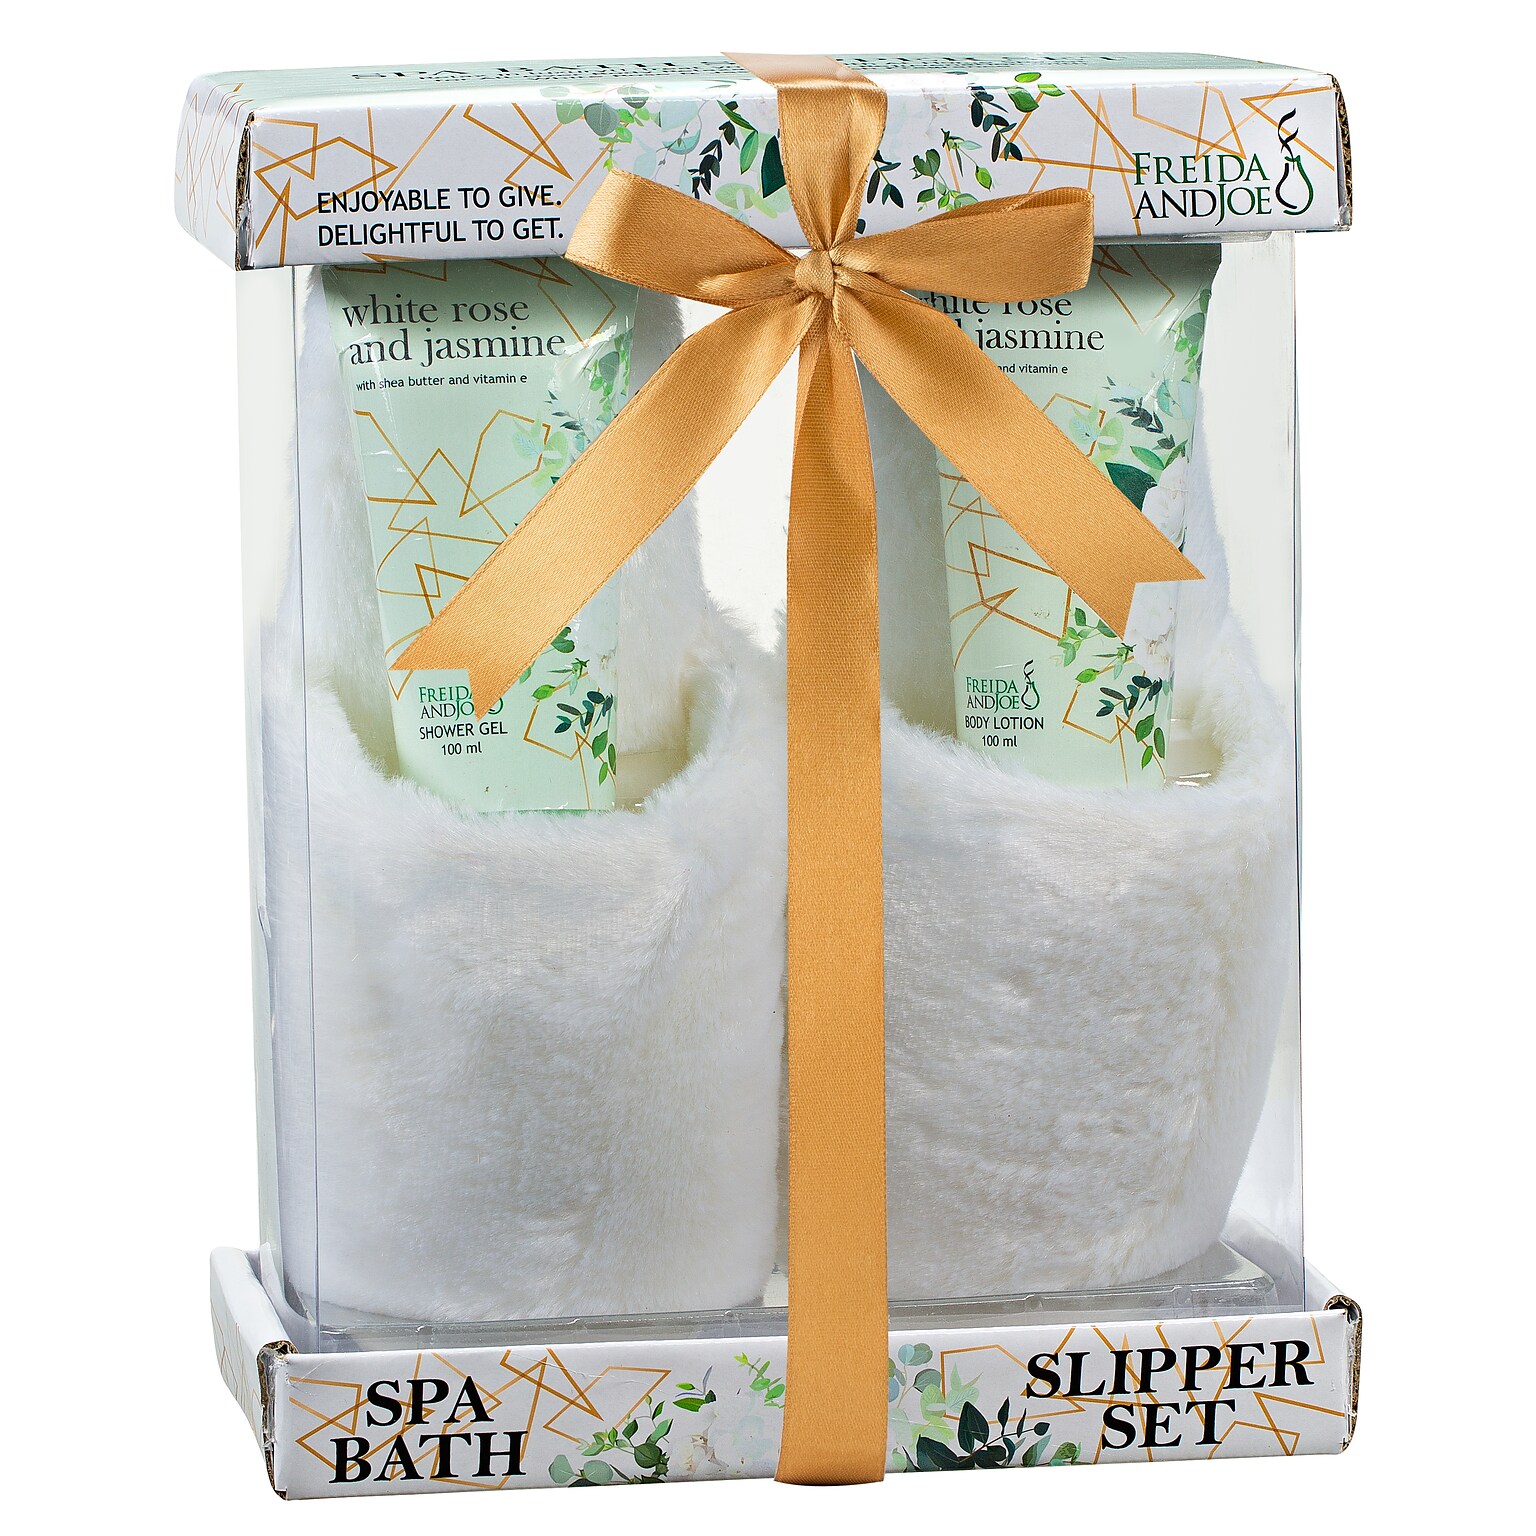 Freida and Joe Bath & Body Spa Gift Set in White Rose Jasmine Fragrance with Luxury Slippers (FJ-145)